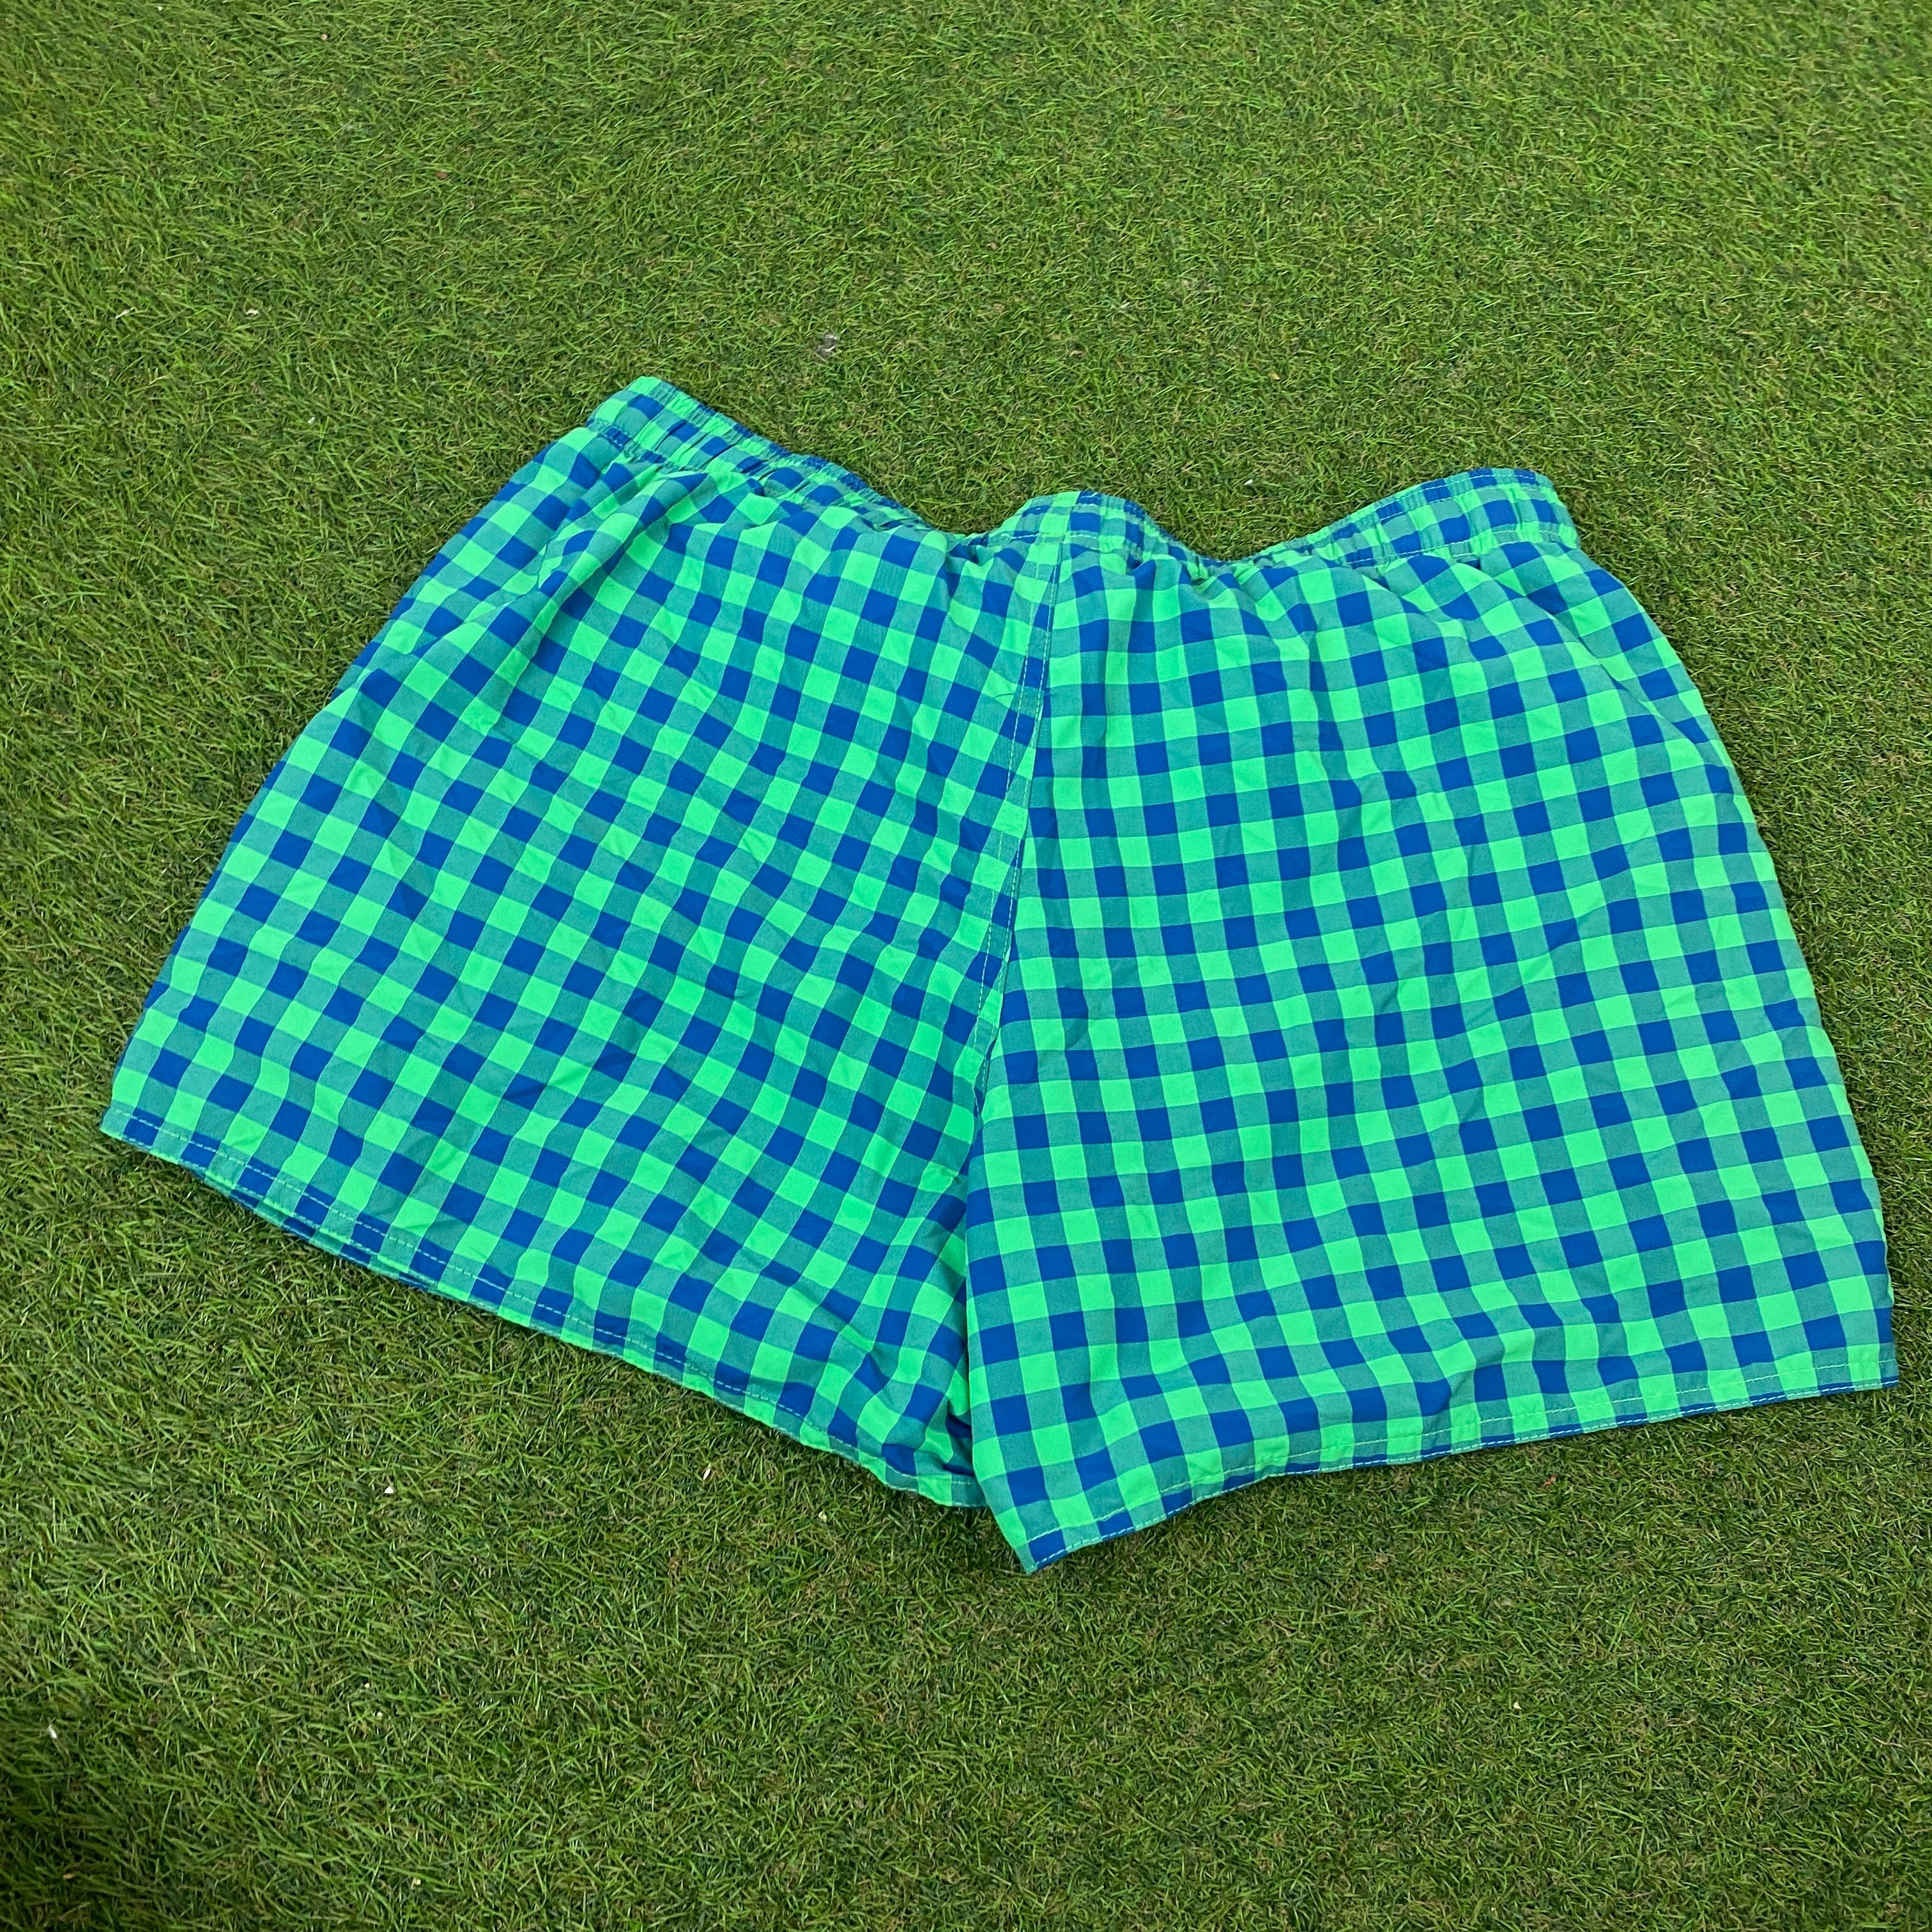 Retro Adidas Shorts Green Small